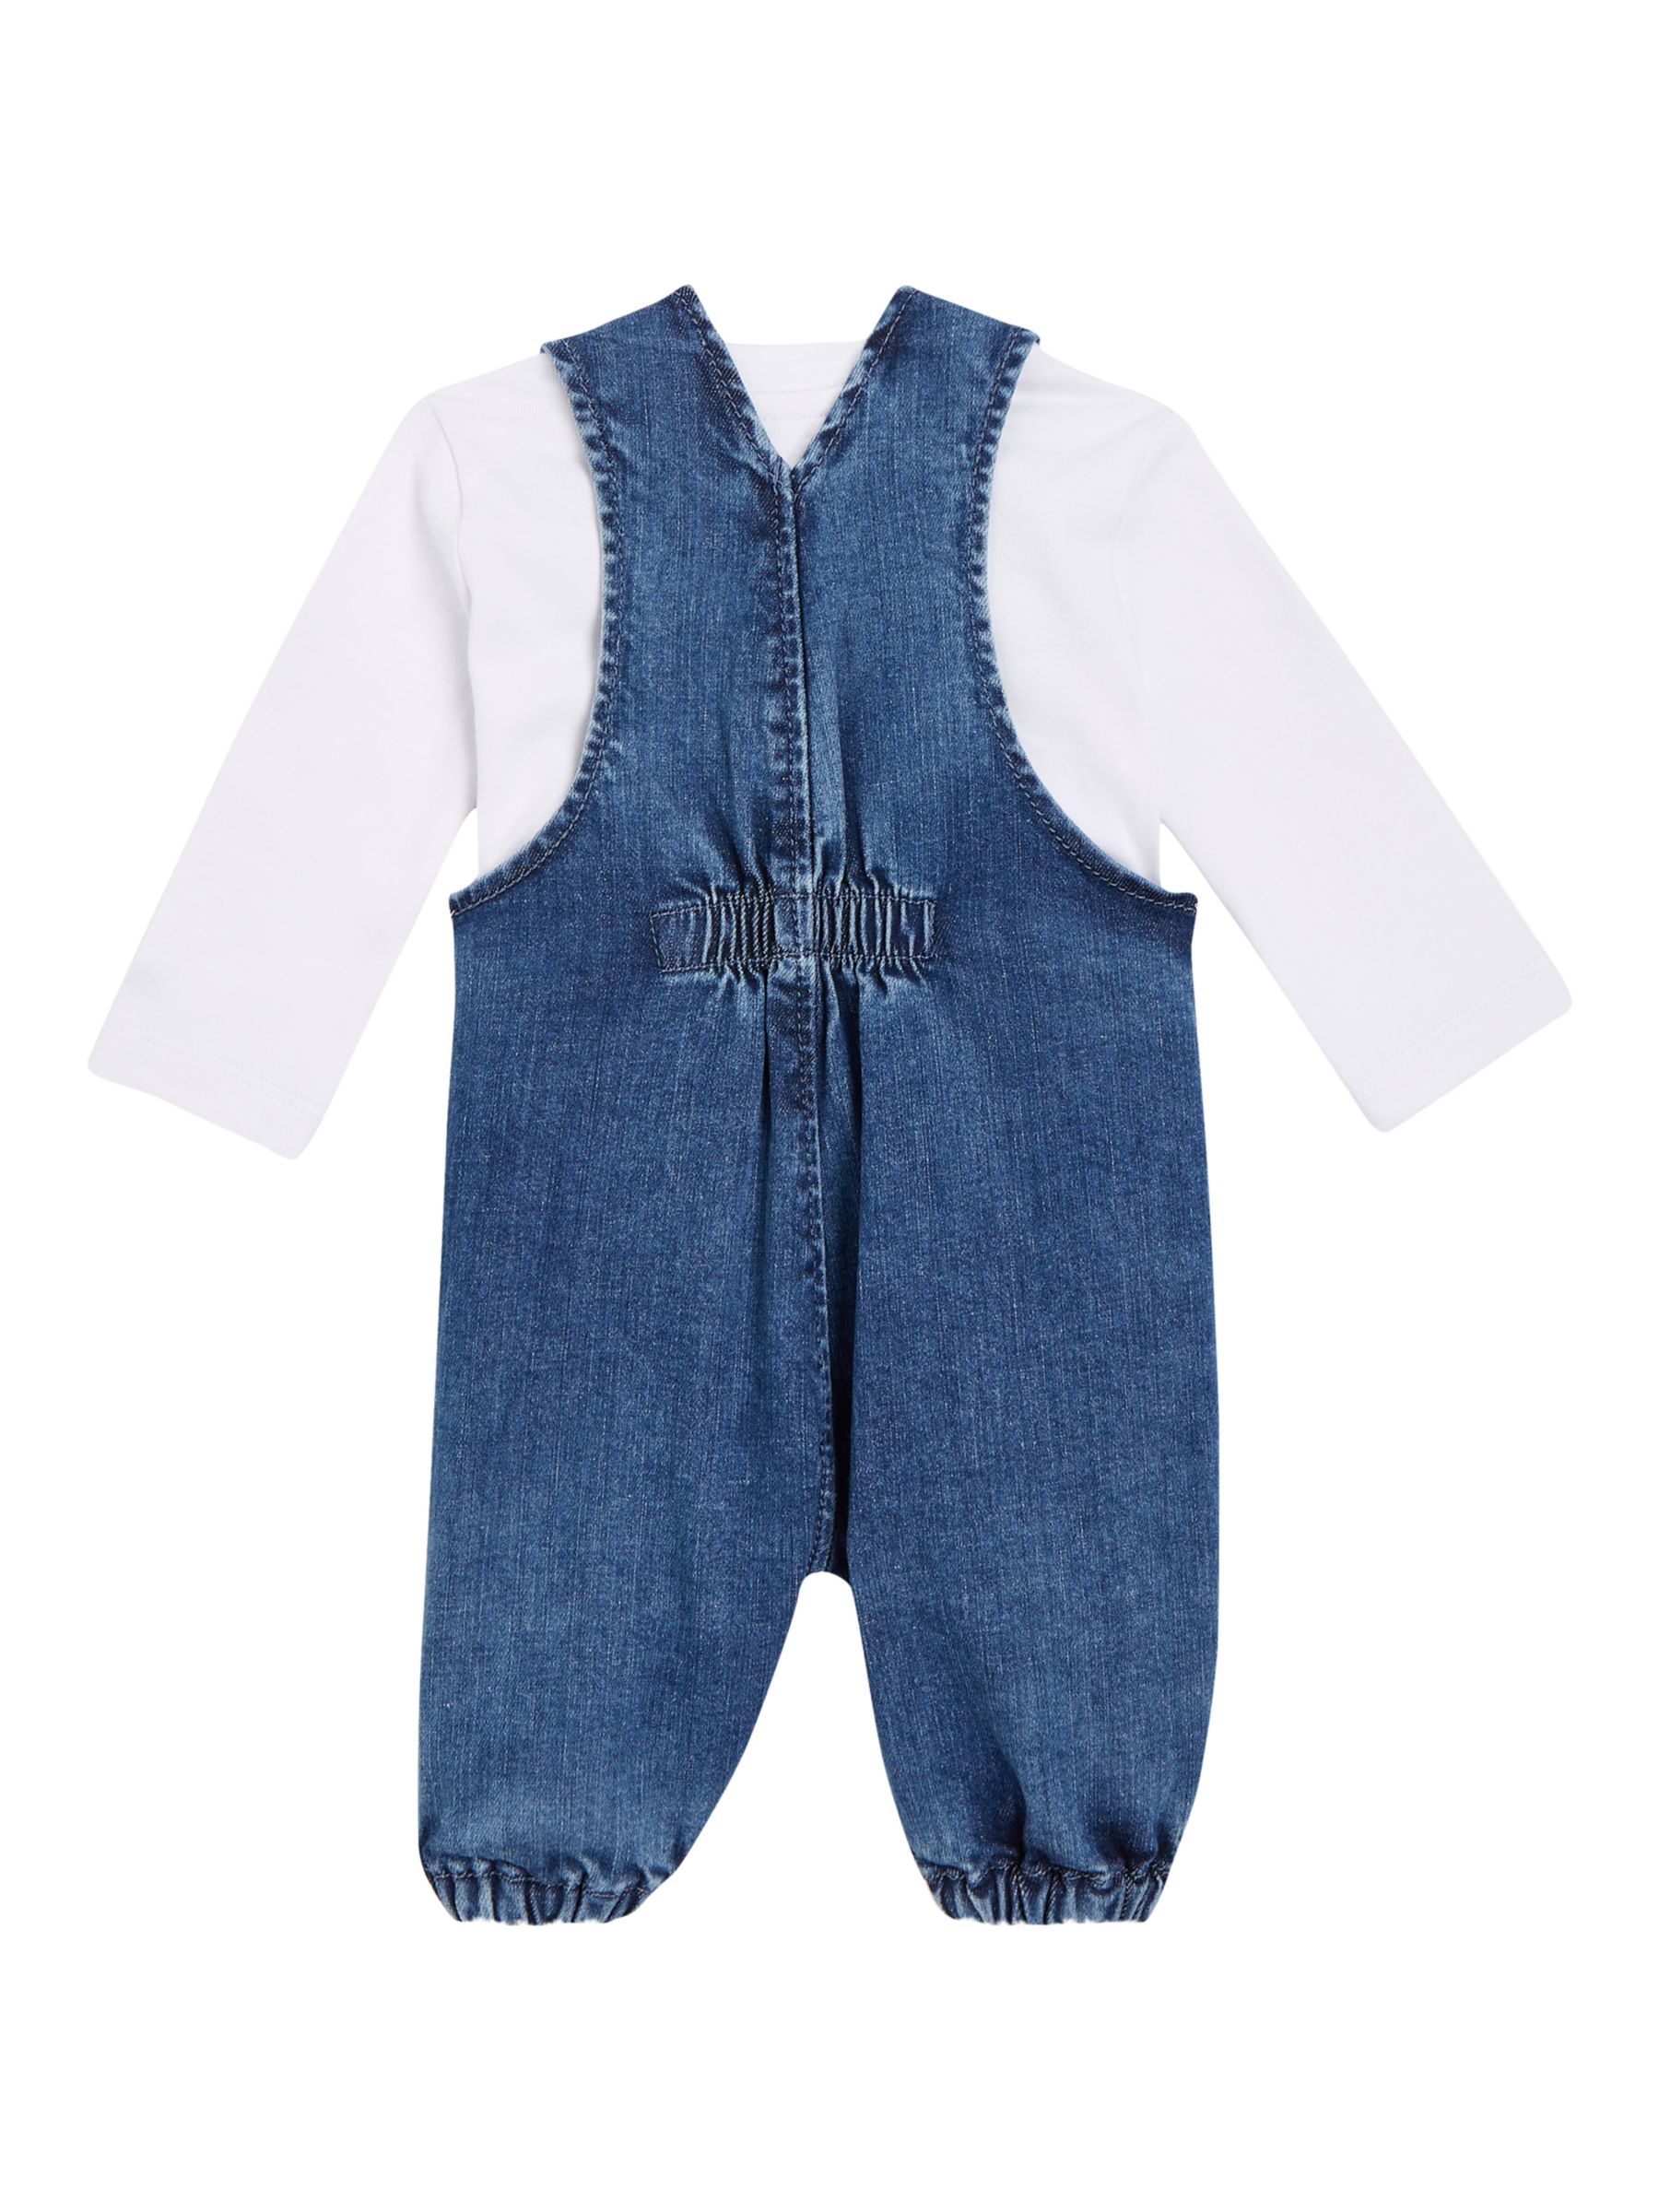 Tommy Hilfiger Baby Denim Dungarees & T-Shirt Set, Blue, 9 months